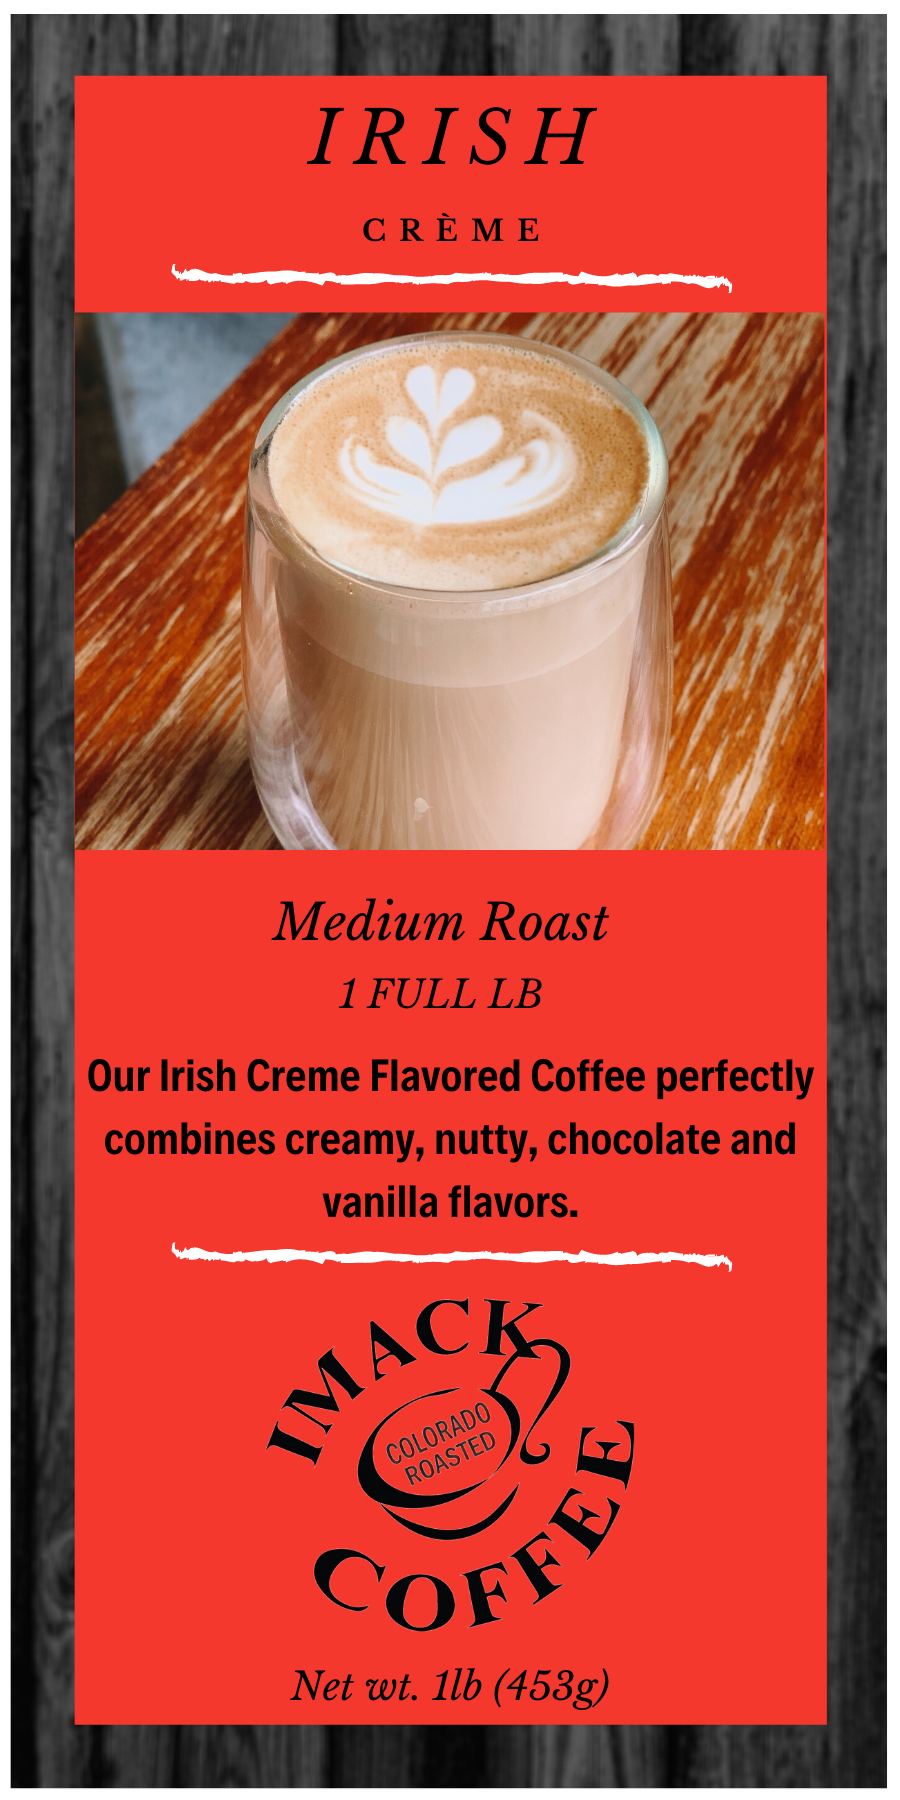 Irish Crème Flavored Coffee